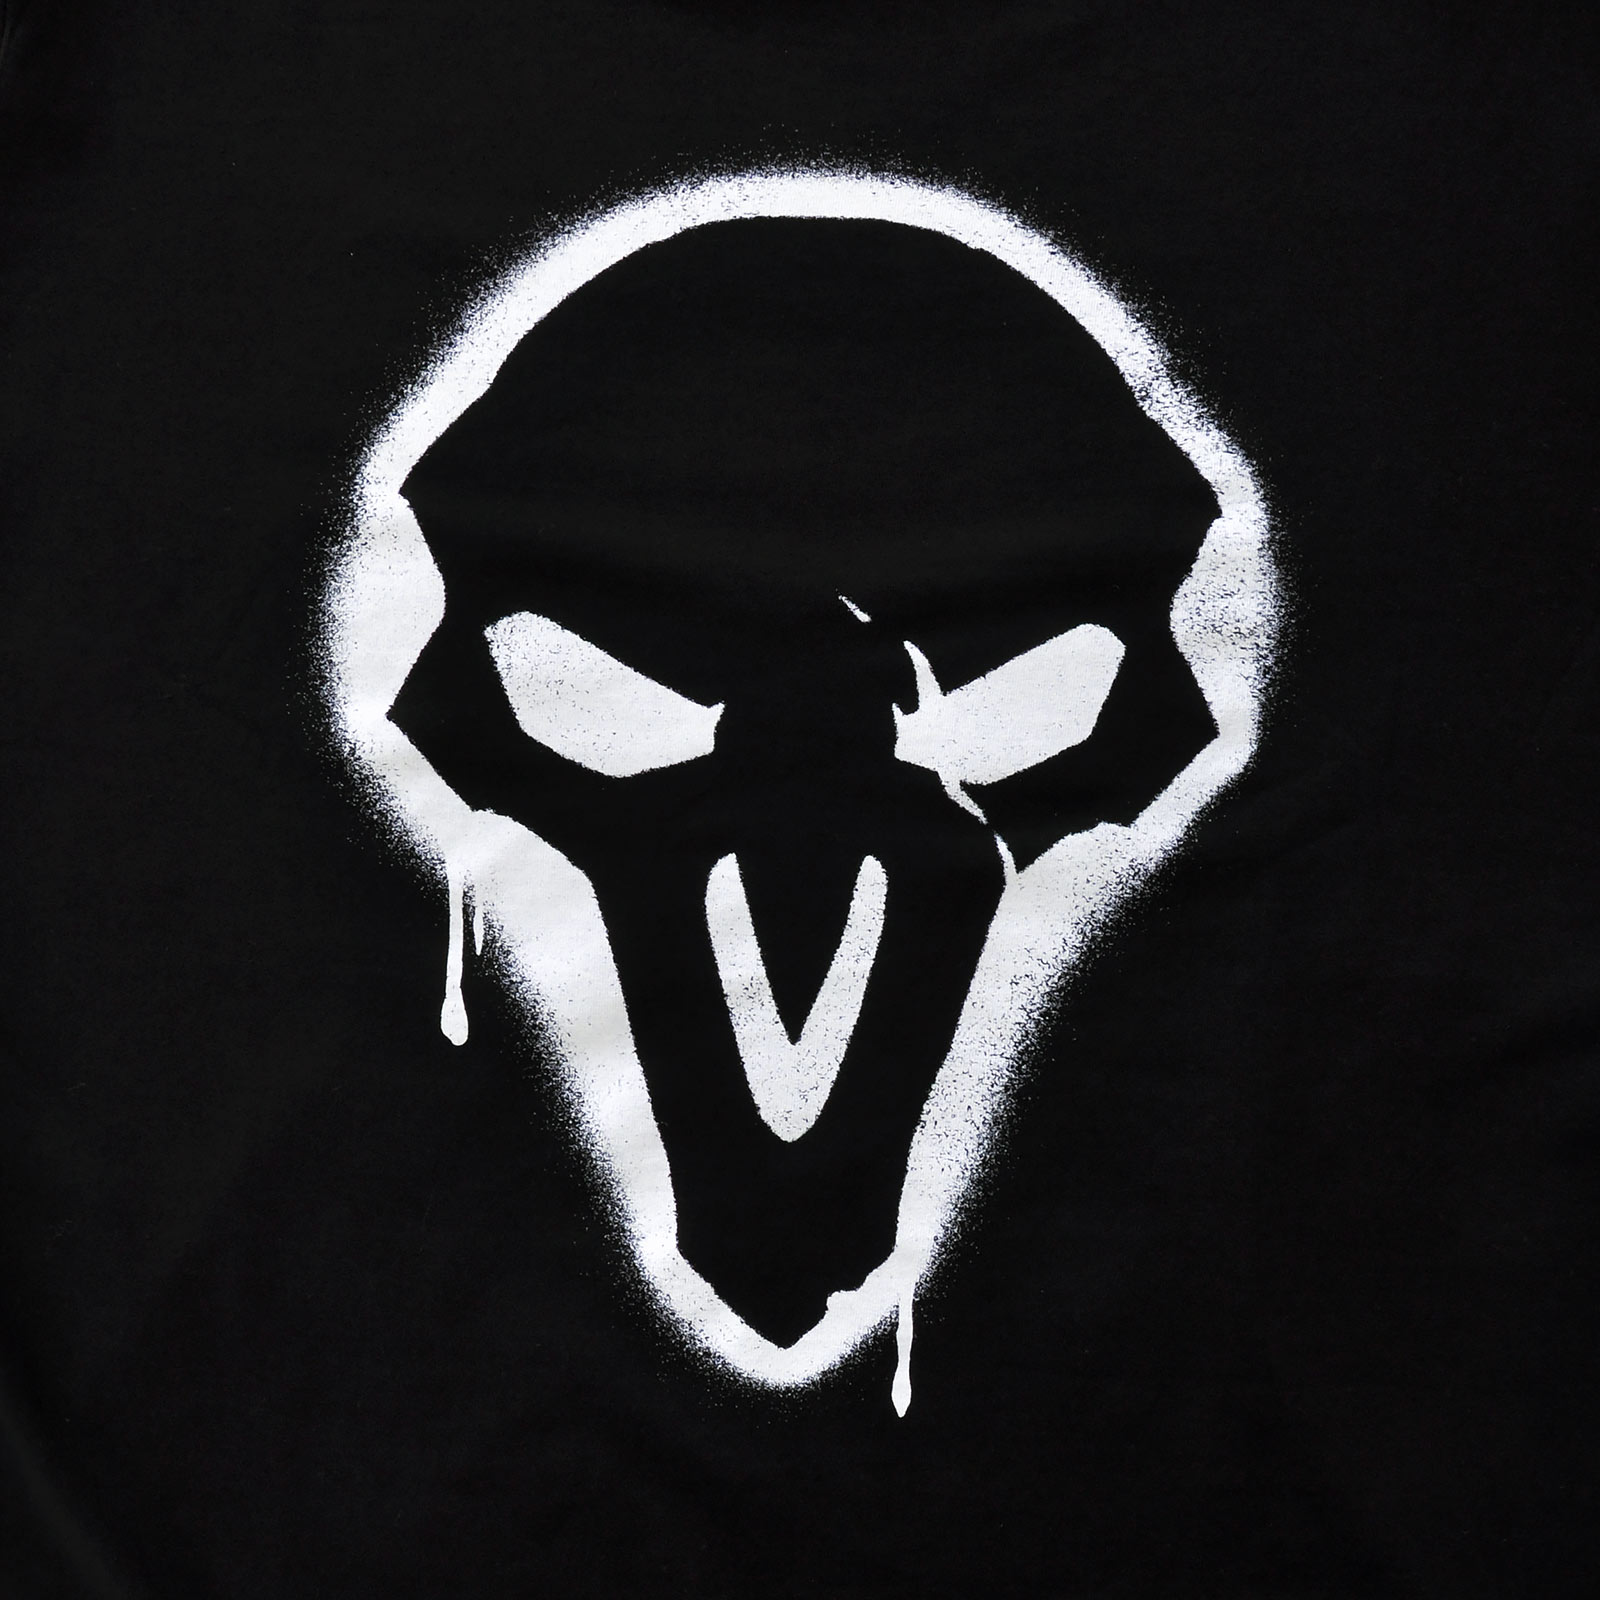 Overwatch - Reaper Spray Logo T-Shirt black